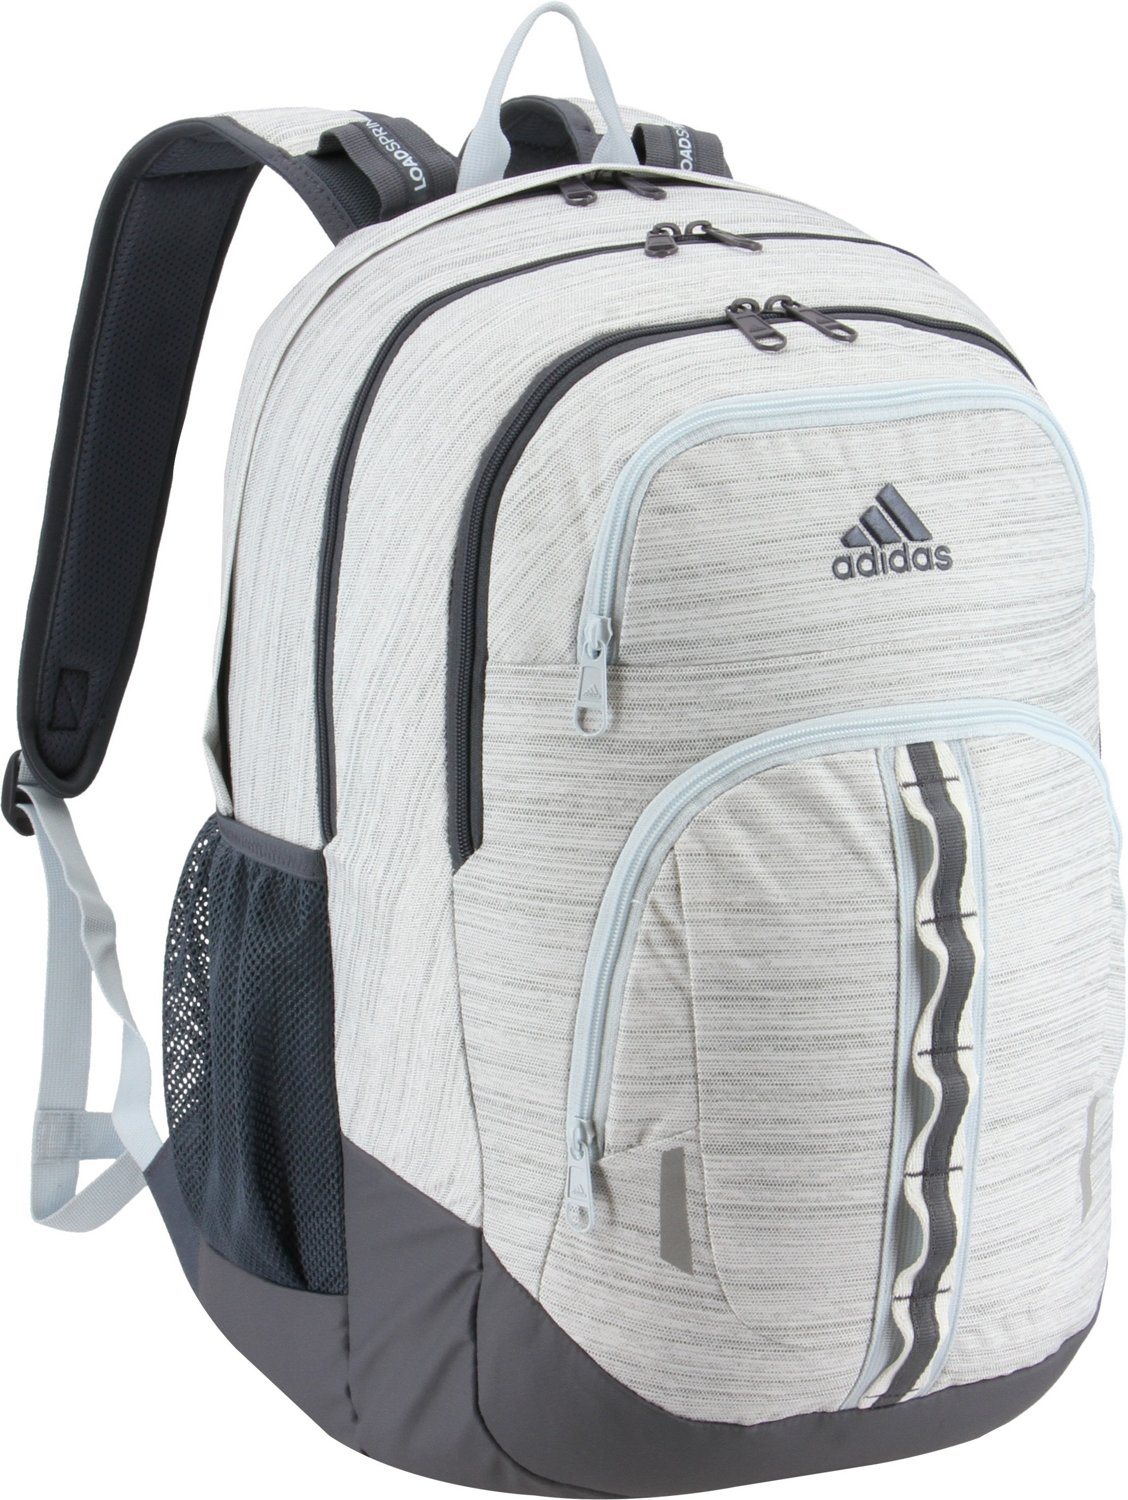 Adidasadidas Prime II Backpack White 